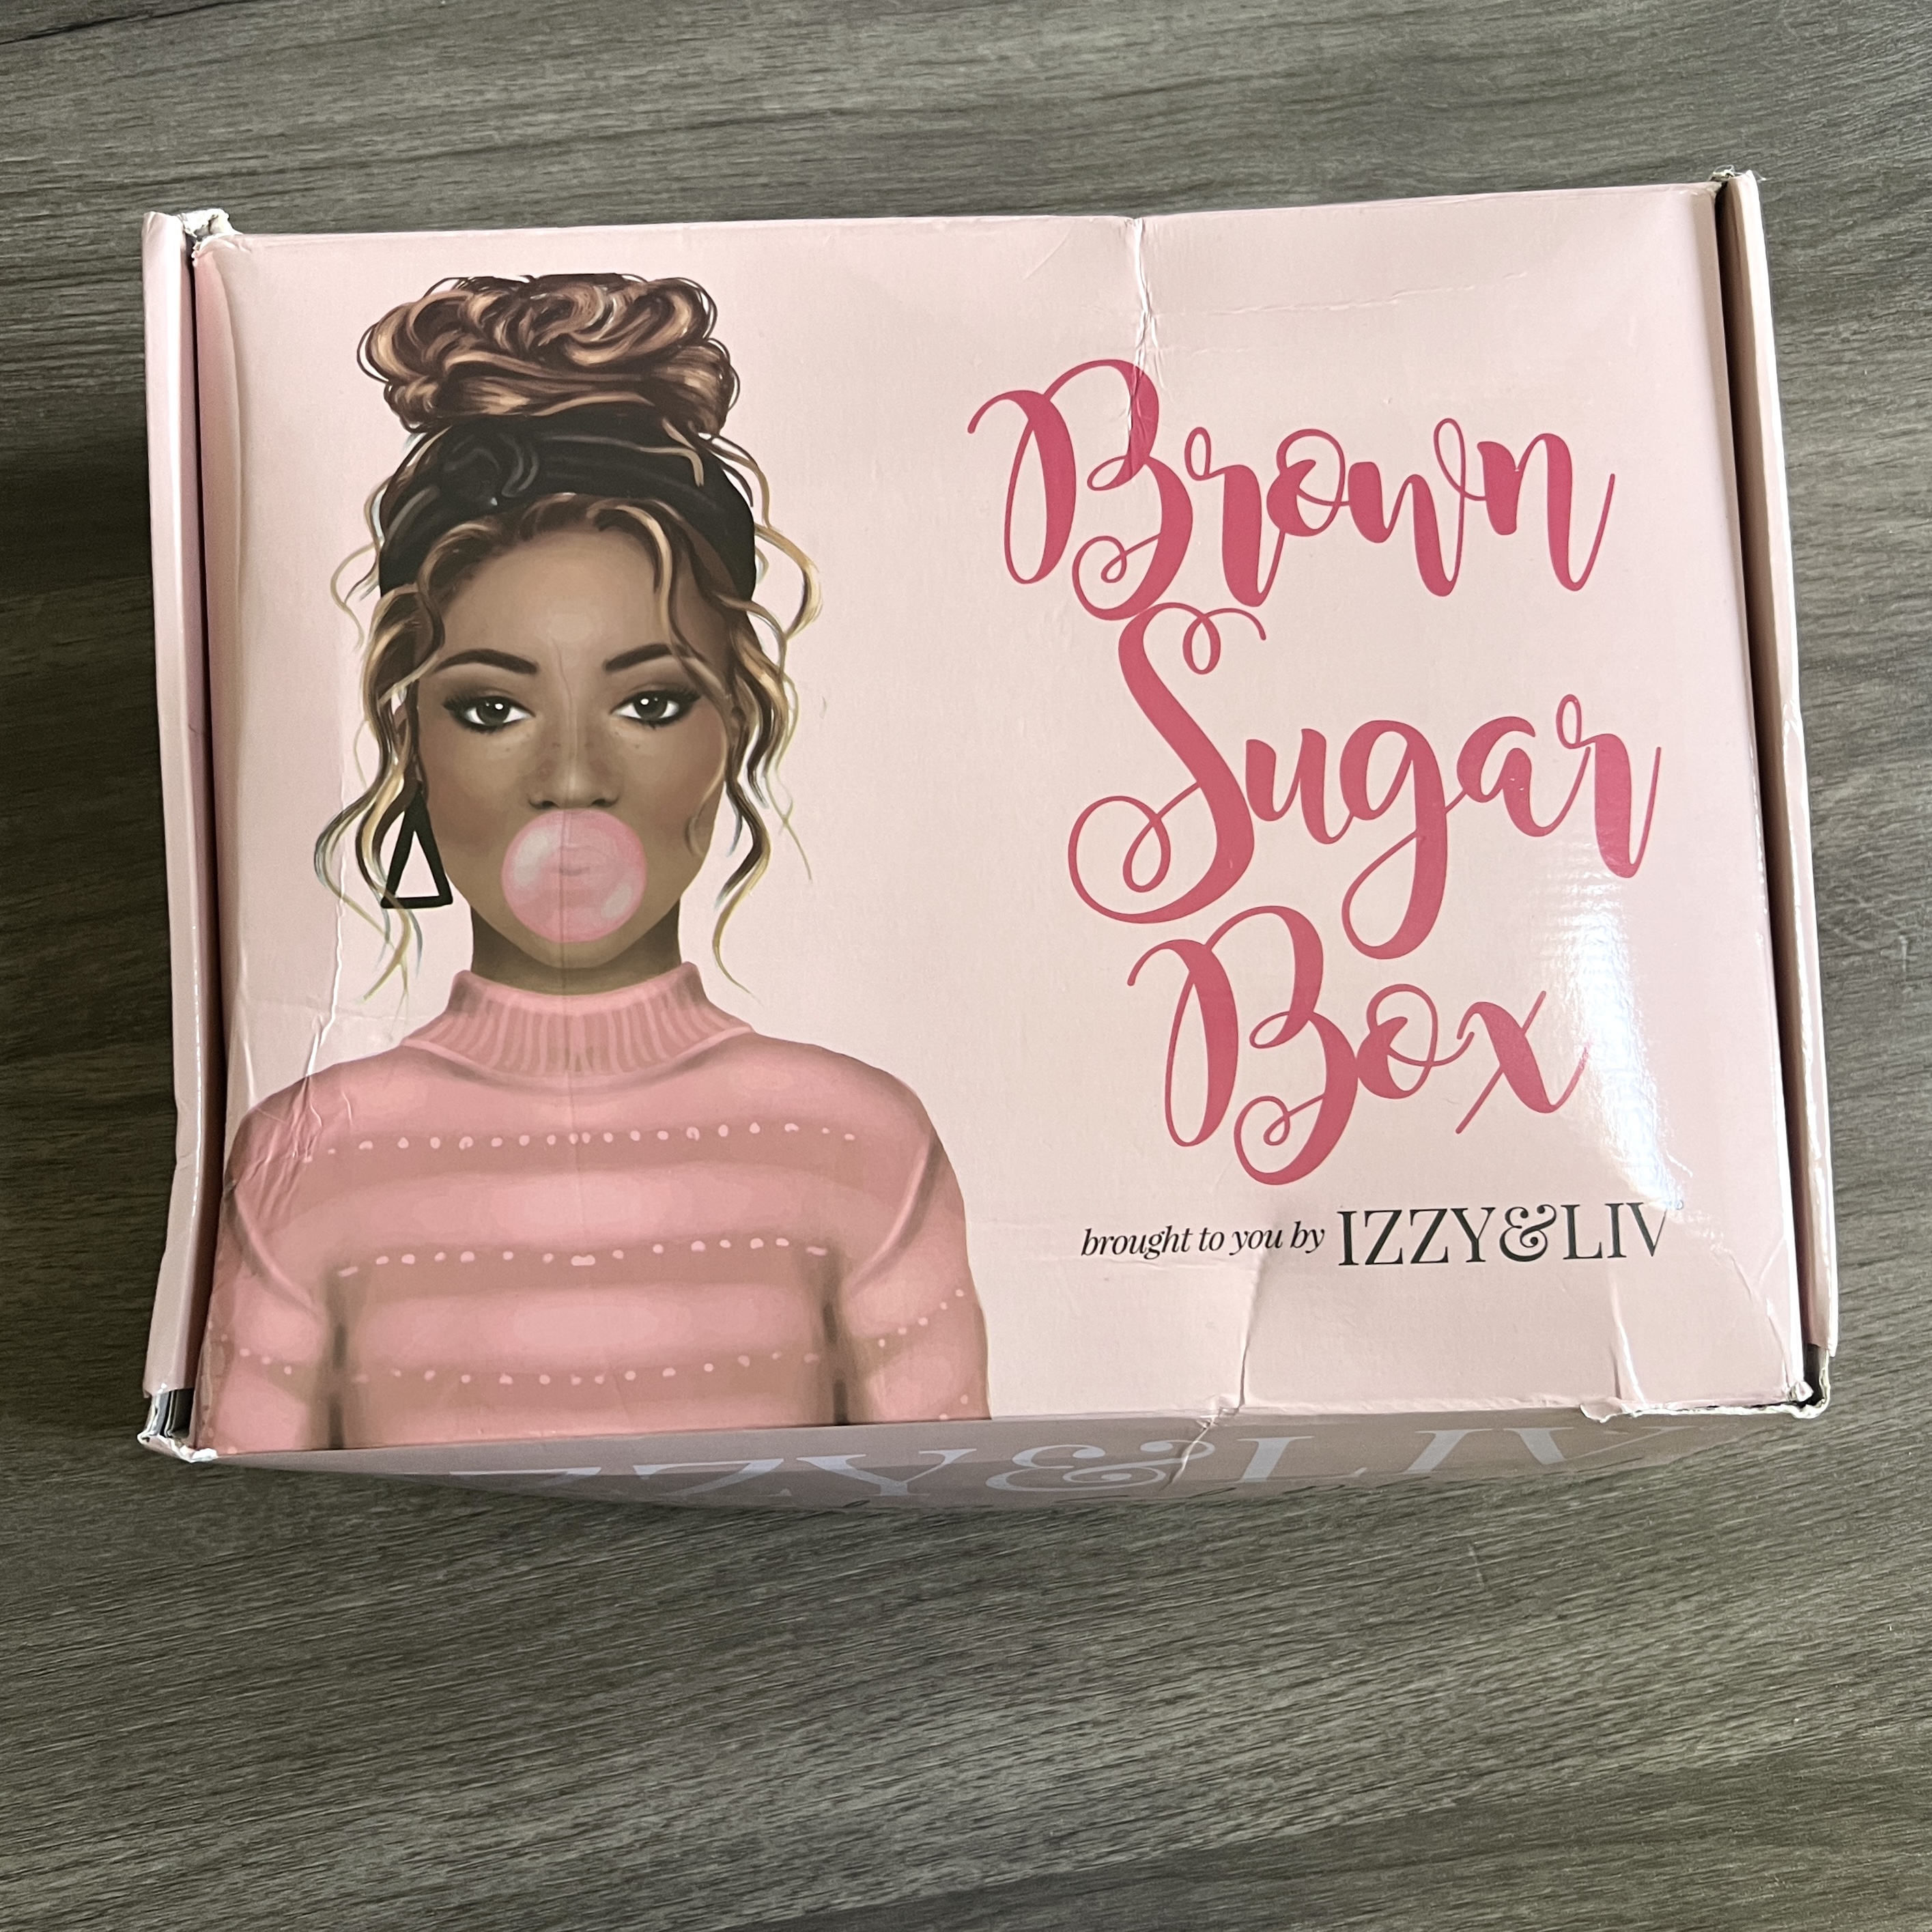 Box for Brown Sugar Box January 2023